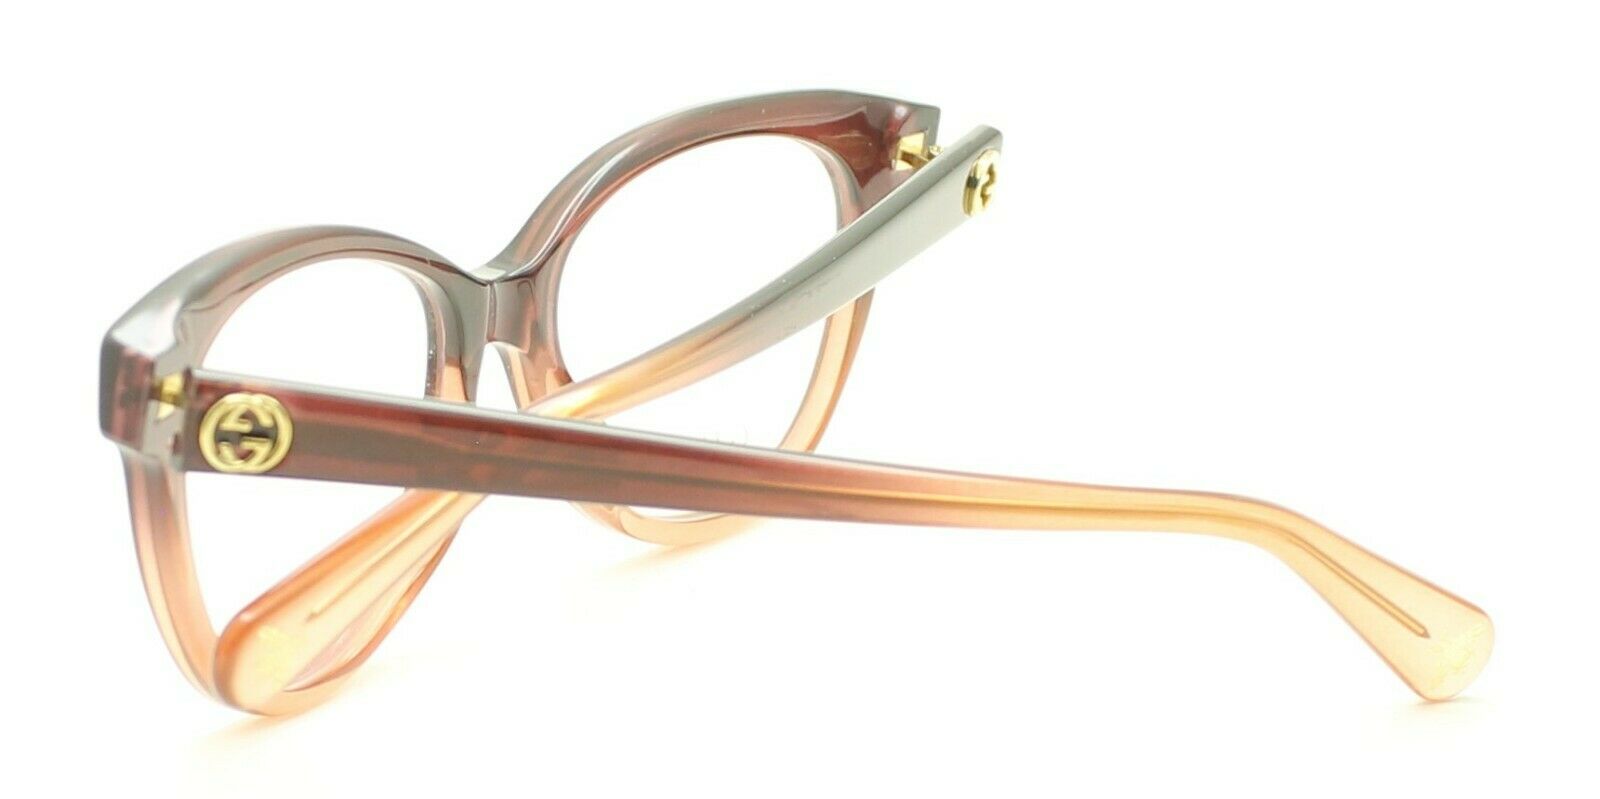 GUCCI GG 0373O 003 52mm Eyewear FRAMES Glasses RX Optical Eyeglasses New - Italy